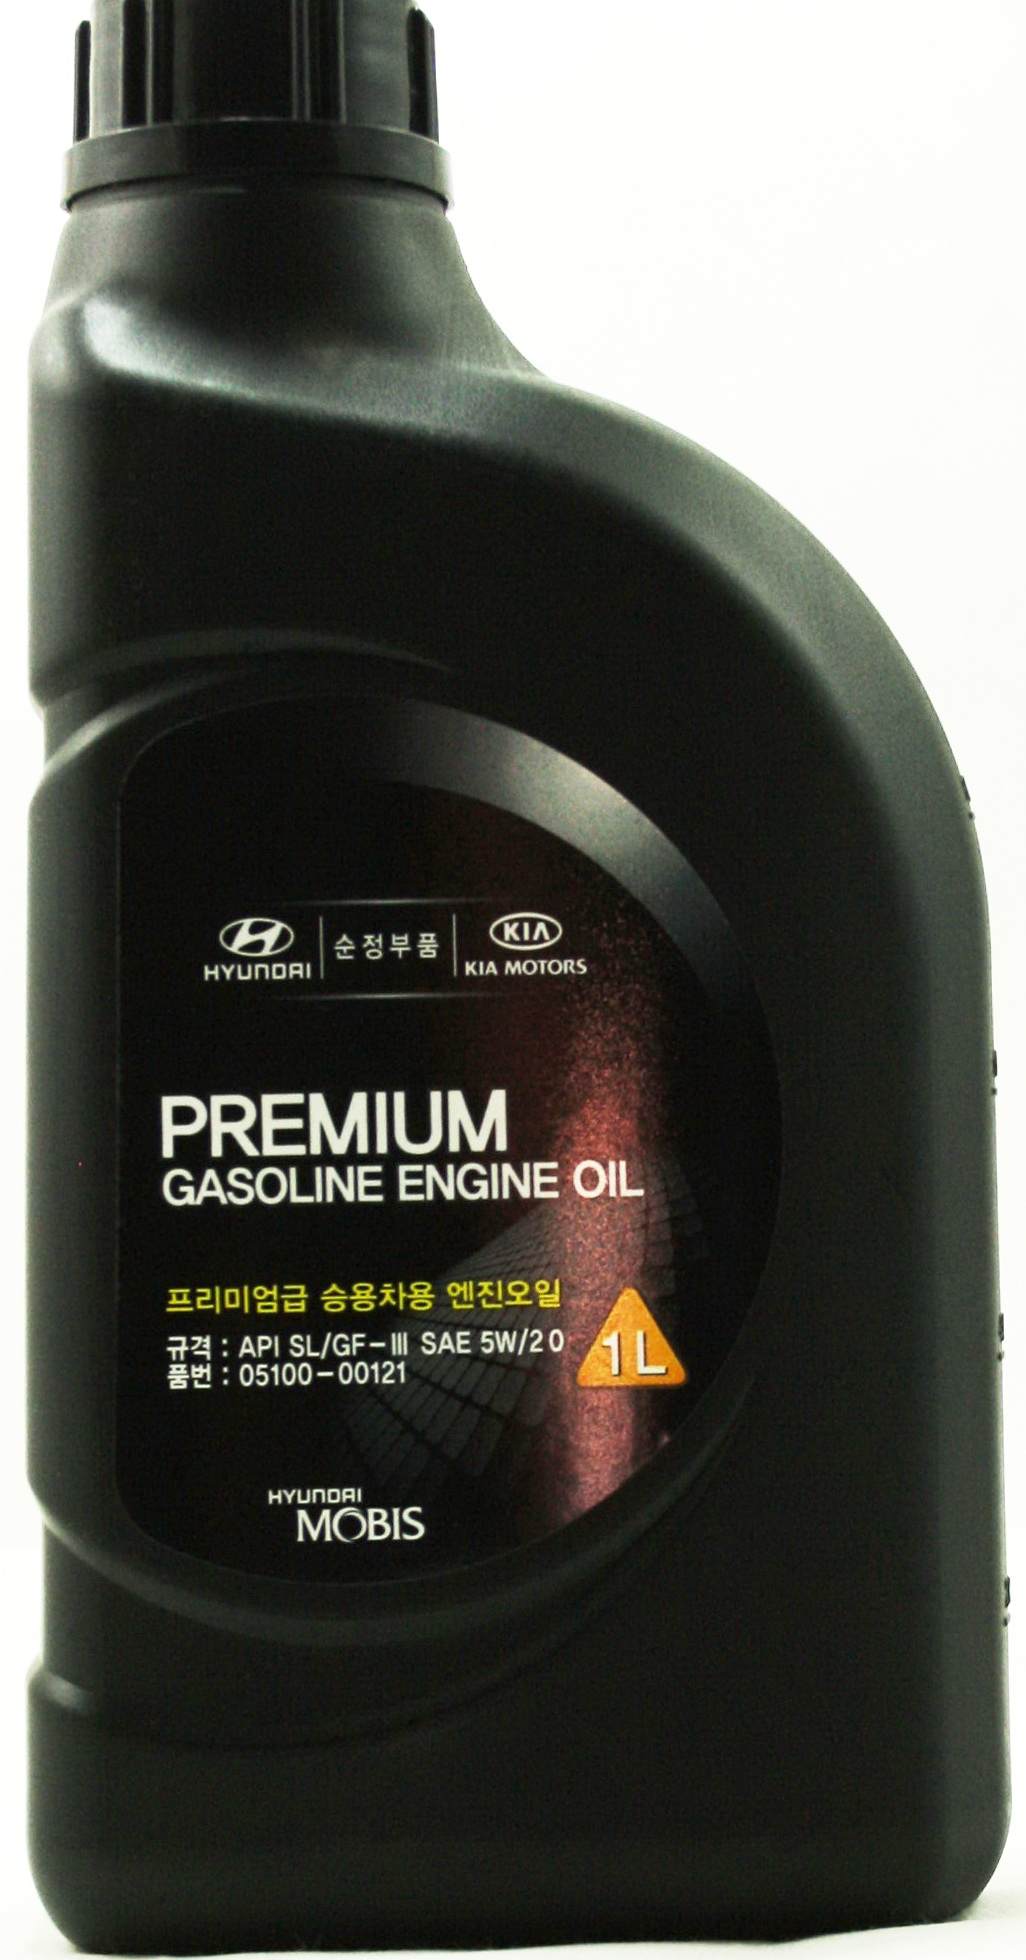 Масло hyundai kia premium. 0510000151 Hyundai/Kia. Hyundai Premium LF 5w-20. Hyundai Premium LF gasoline 5w-20. Синтетическое Premium LF gasoline 5w-20, 1л Hyundai/Kia 05100-00151.